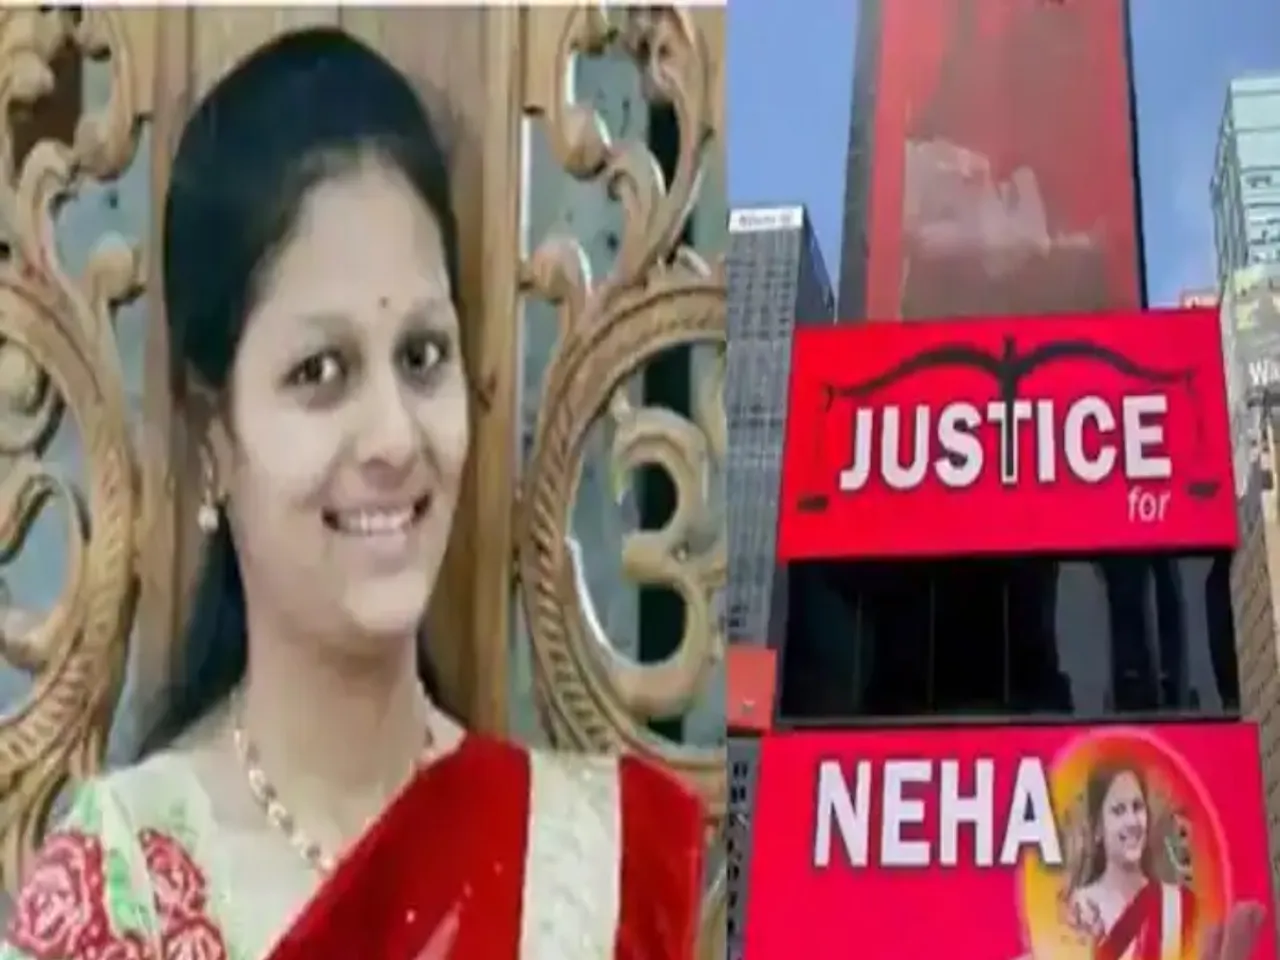 neha justice